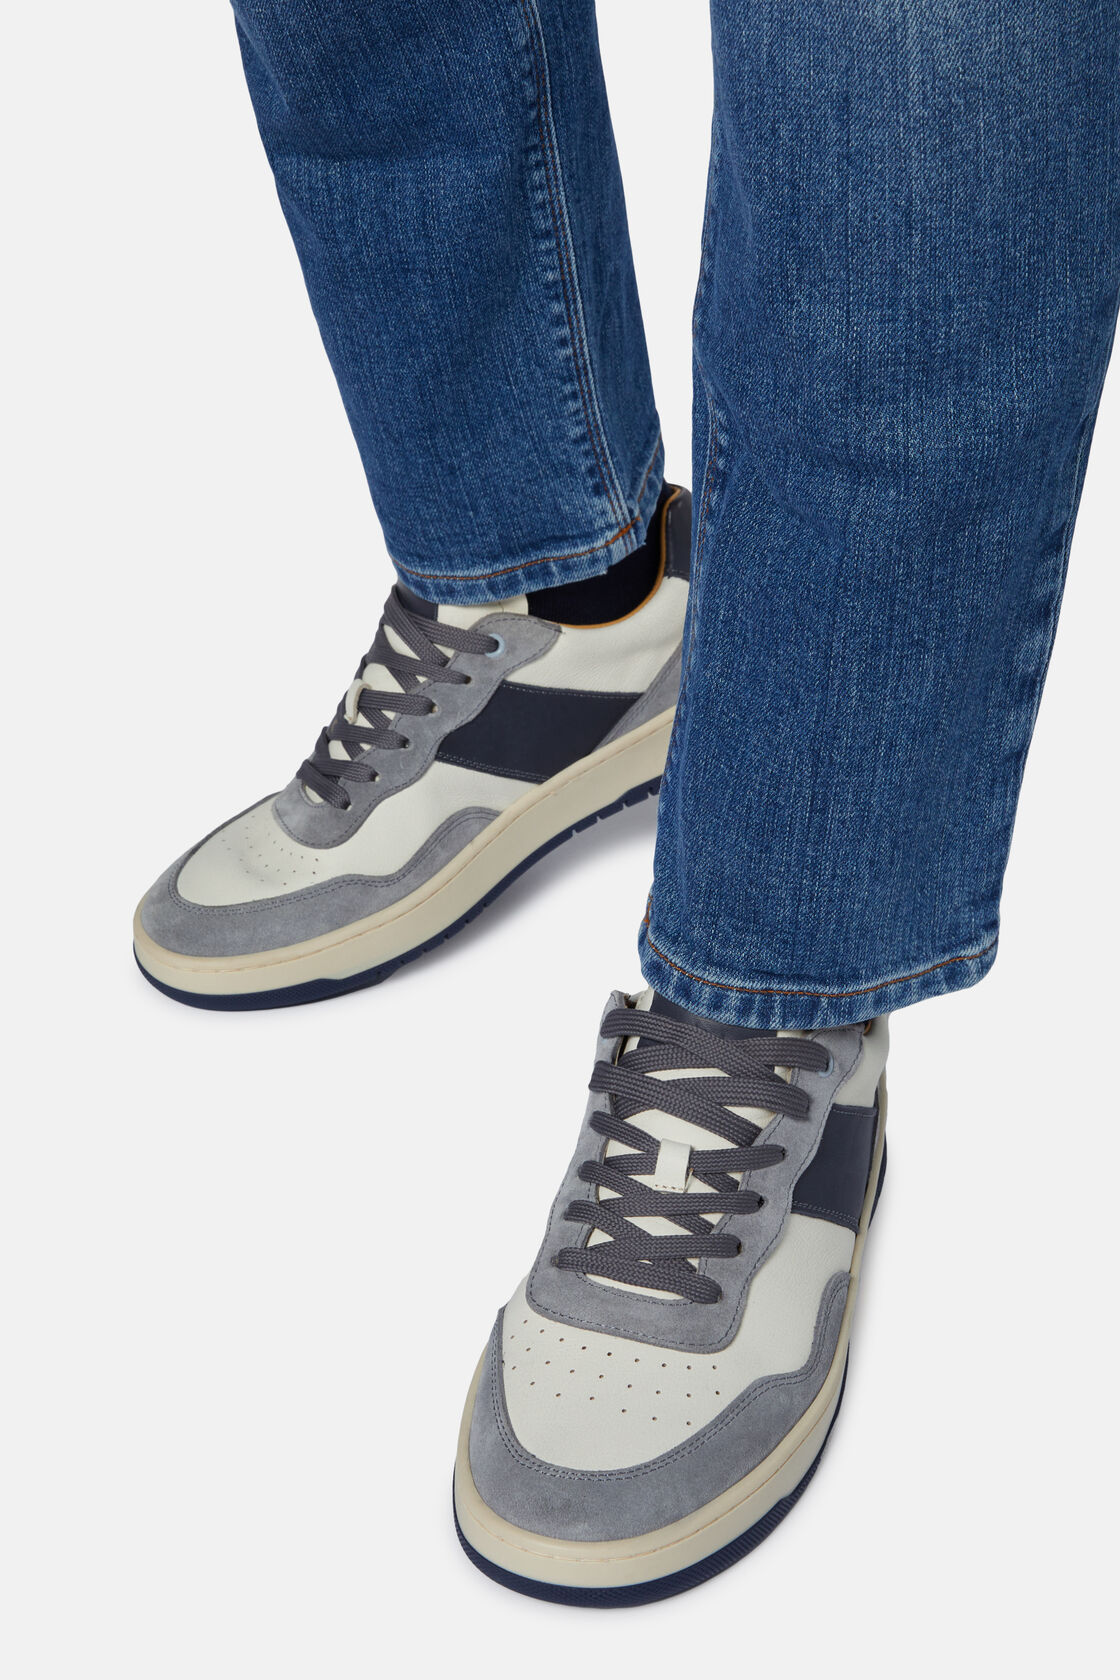 Sneaker Aus Leder in Grau Und Marineblau, Navy - Grau, hi-res